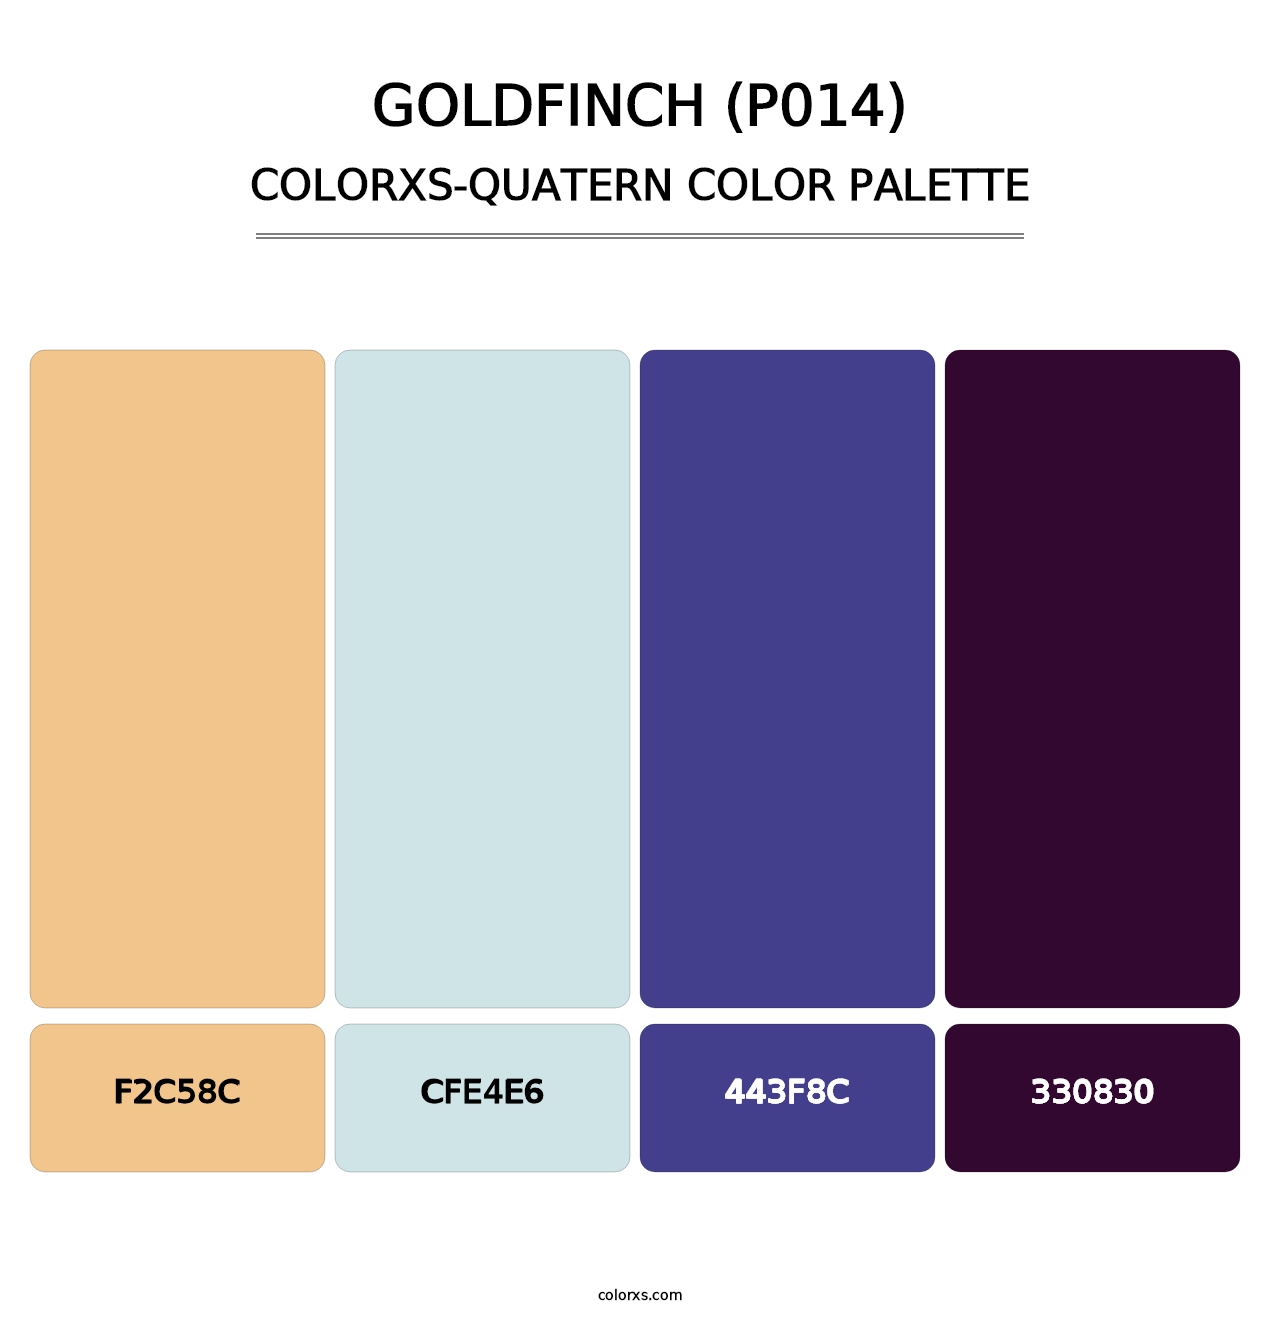 Goldfinch (P014) - Colorxs Quatern Palette